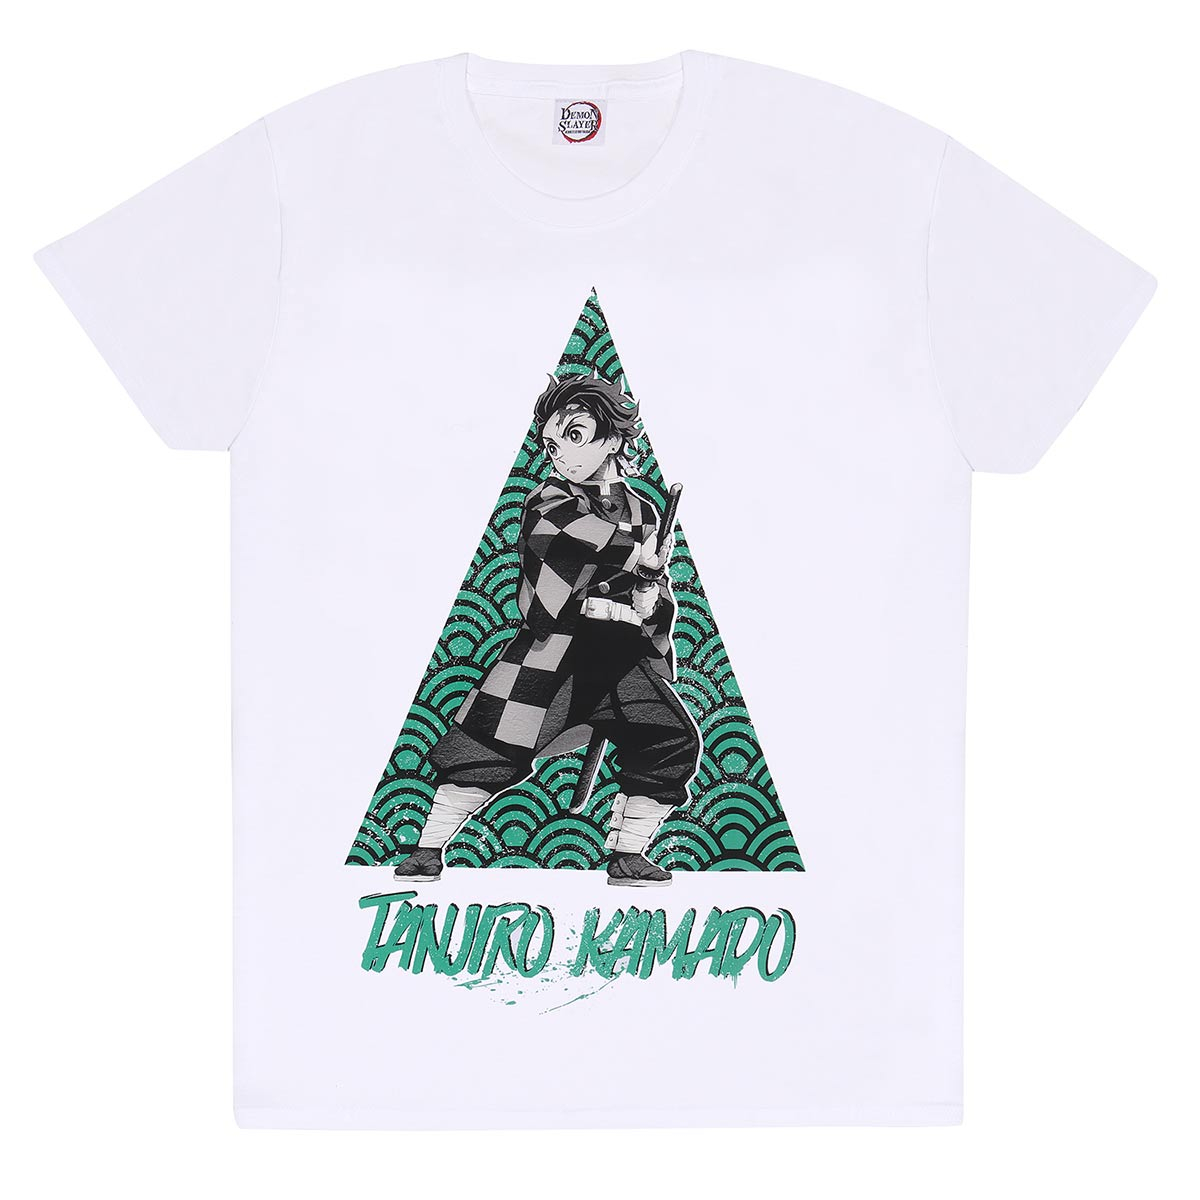 Demon Slayer - Tanjiro Kamado  - weiß - T-Shirt